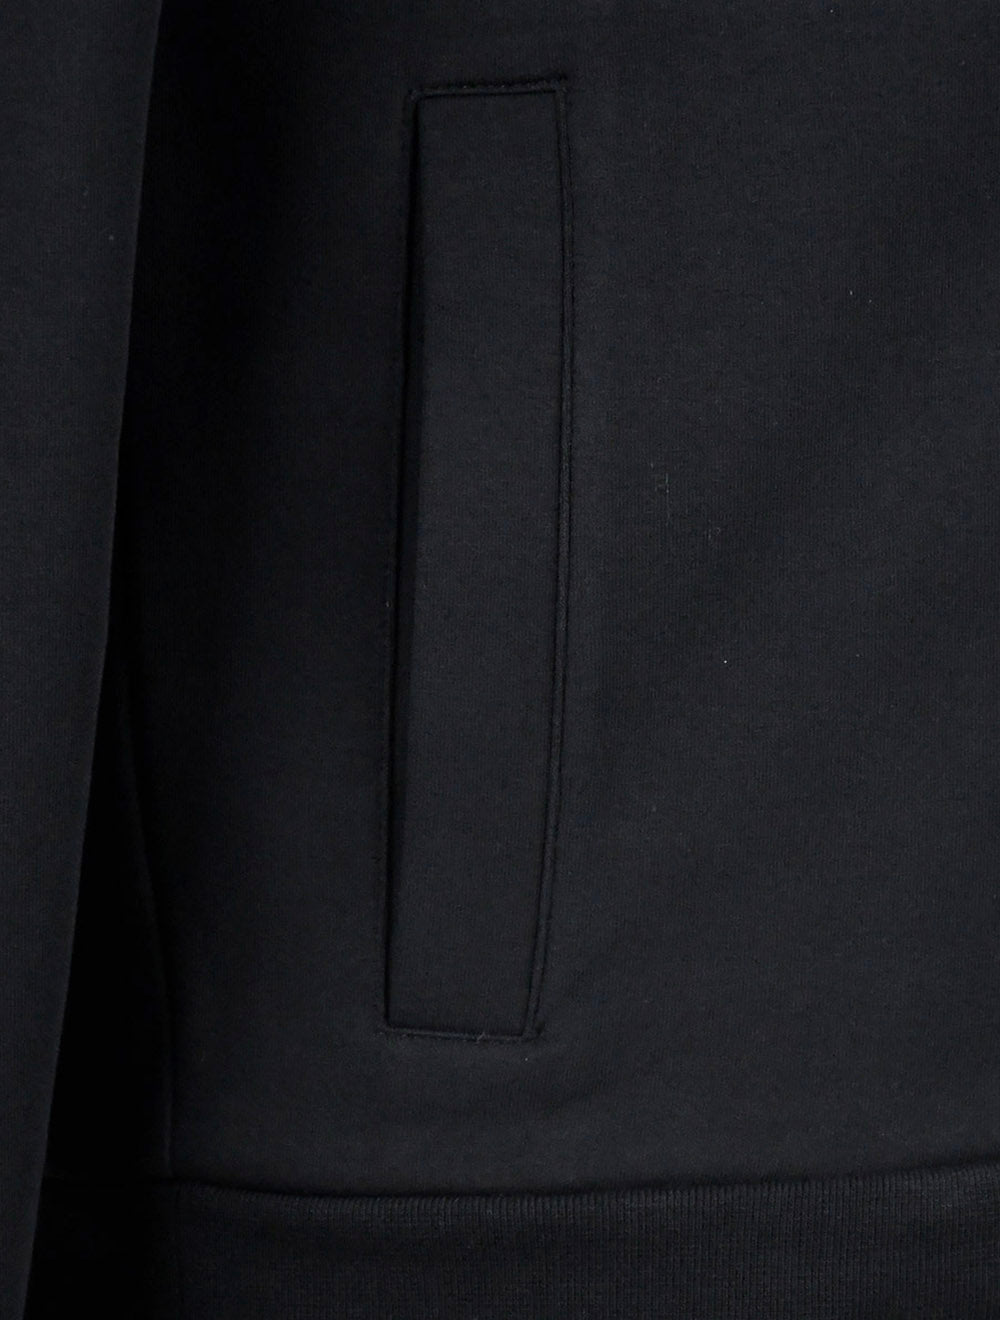 Hugo Boss sudadera con capucha de algodón negro Pl Ea para Nba Lakers